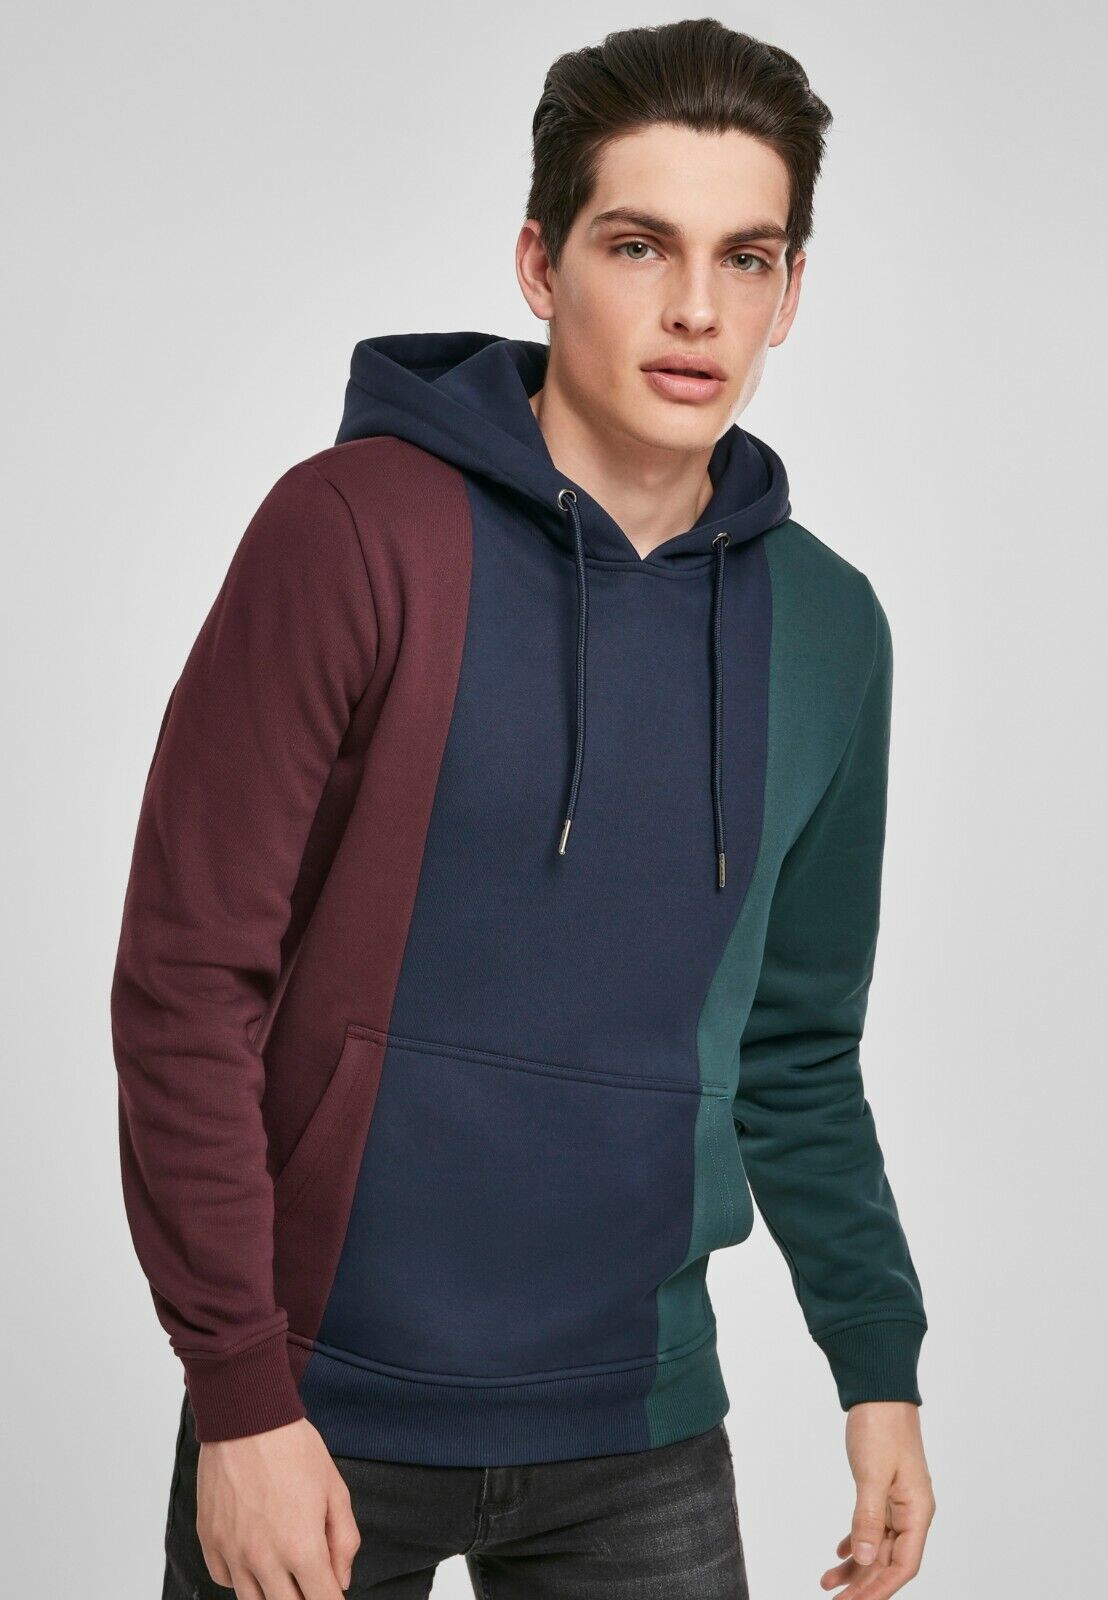 Urban Classics Jersey Men\'s Sweatshirt with Hood Tripple Over Sizes | eBay